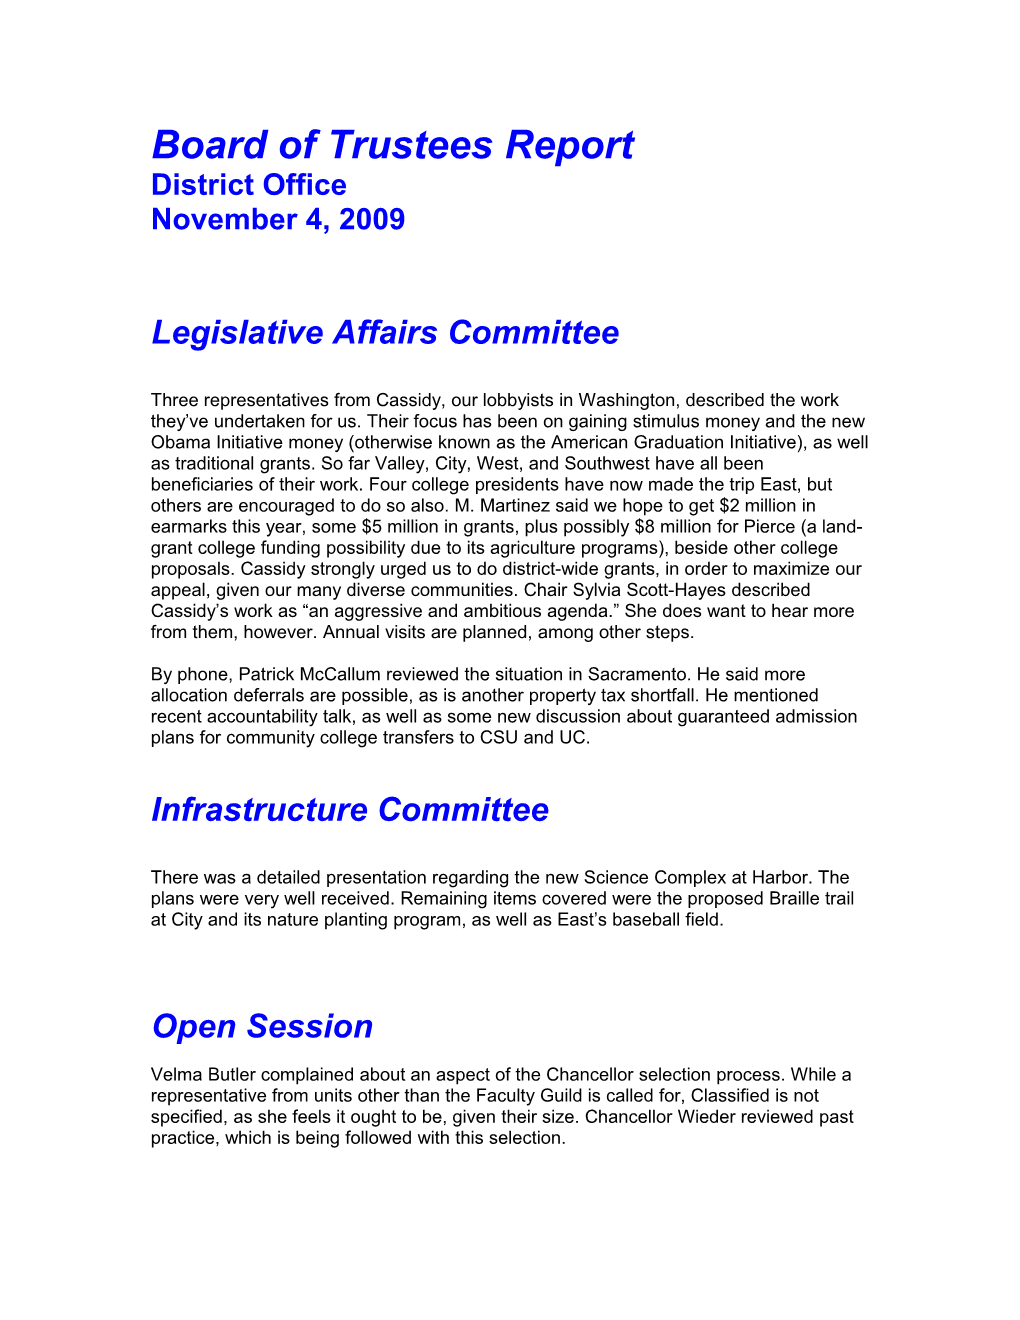 Board of Trustees Report s2